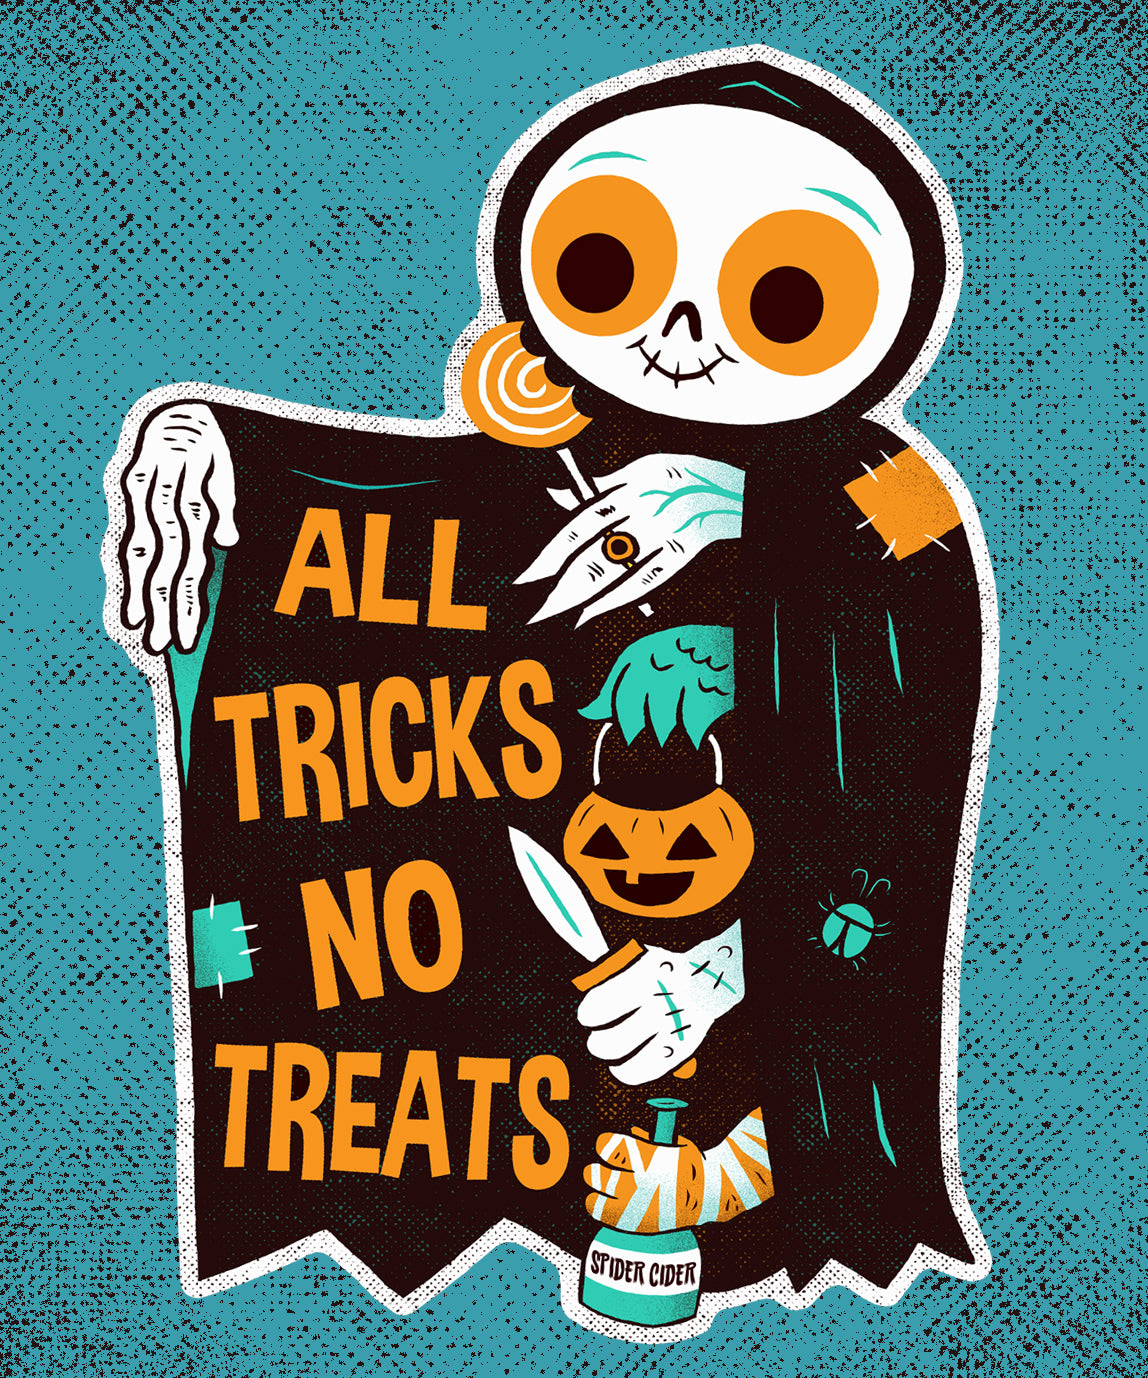 "All Tricks no Treats" cutout print